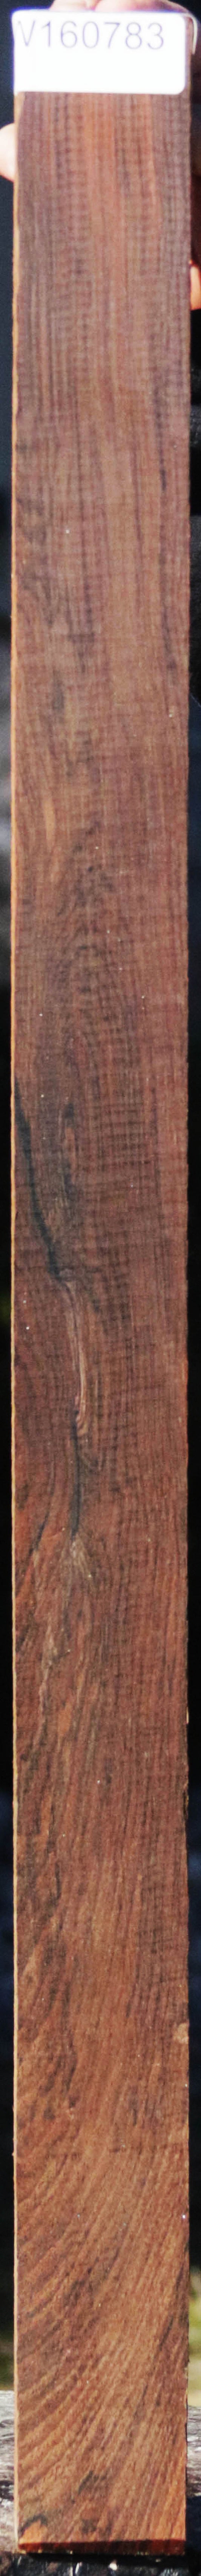 Brazilian Rosewood Instrument Wood